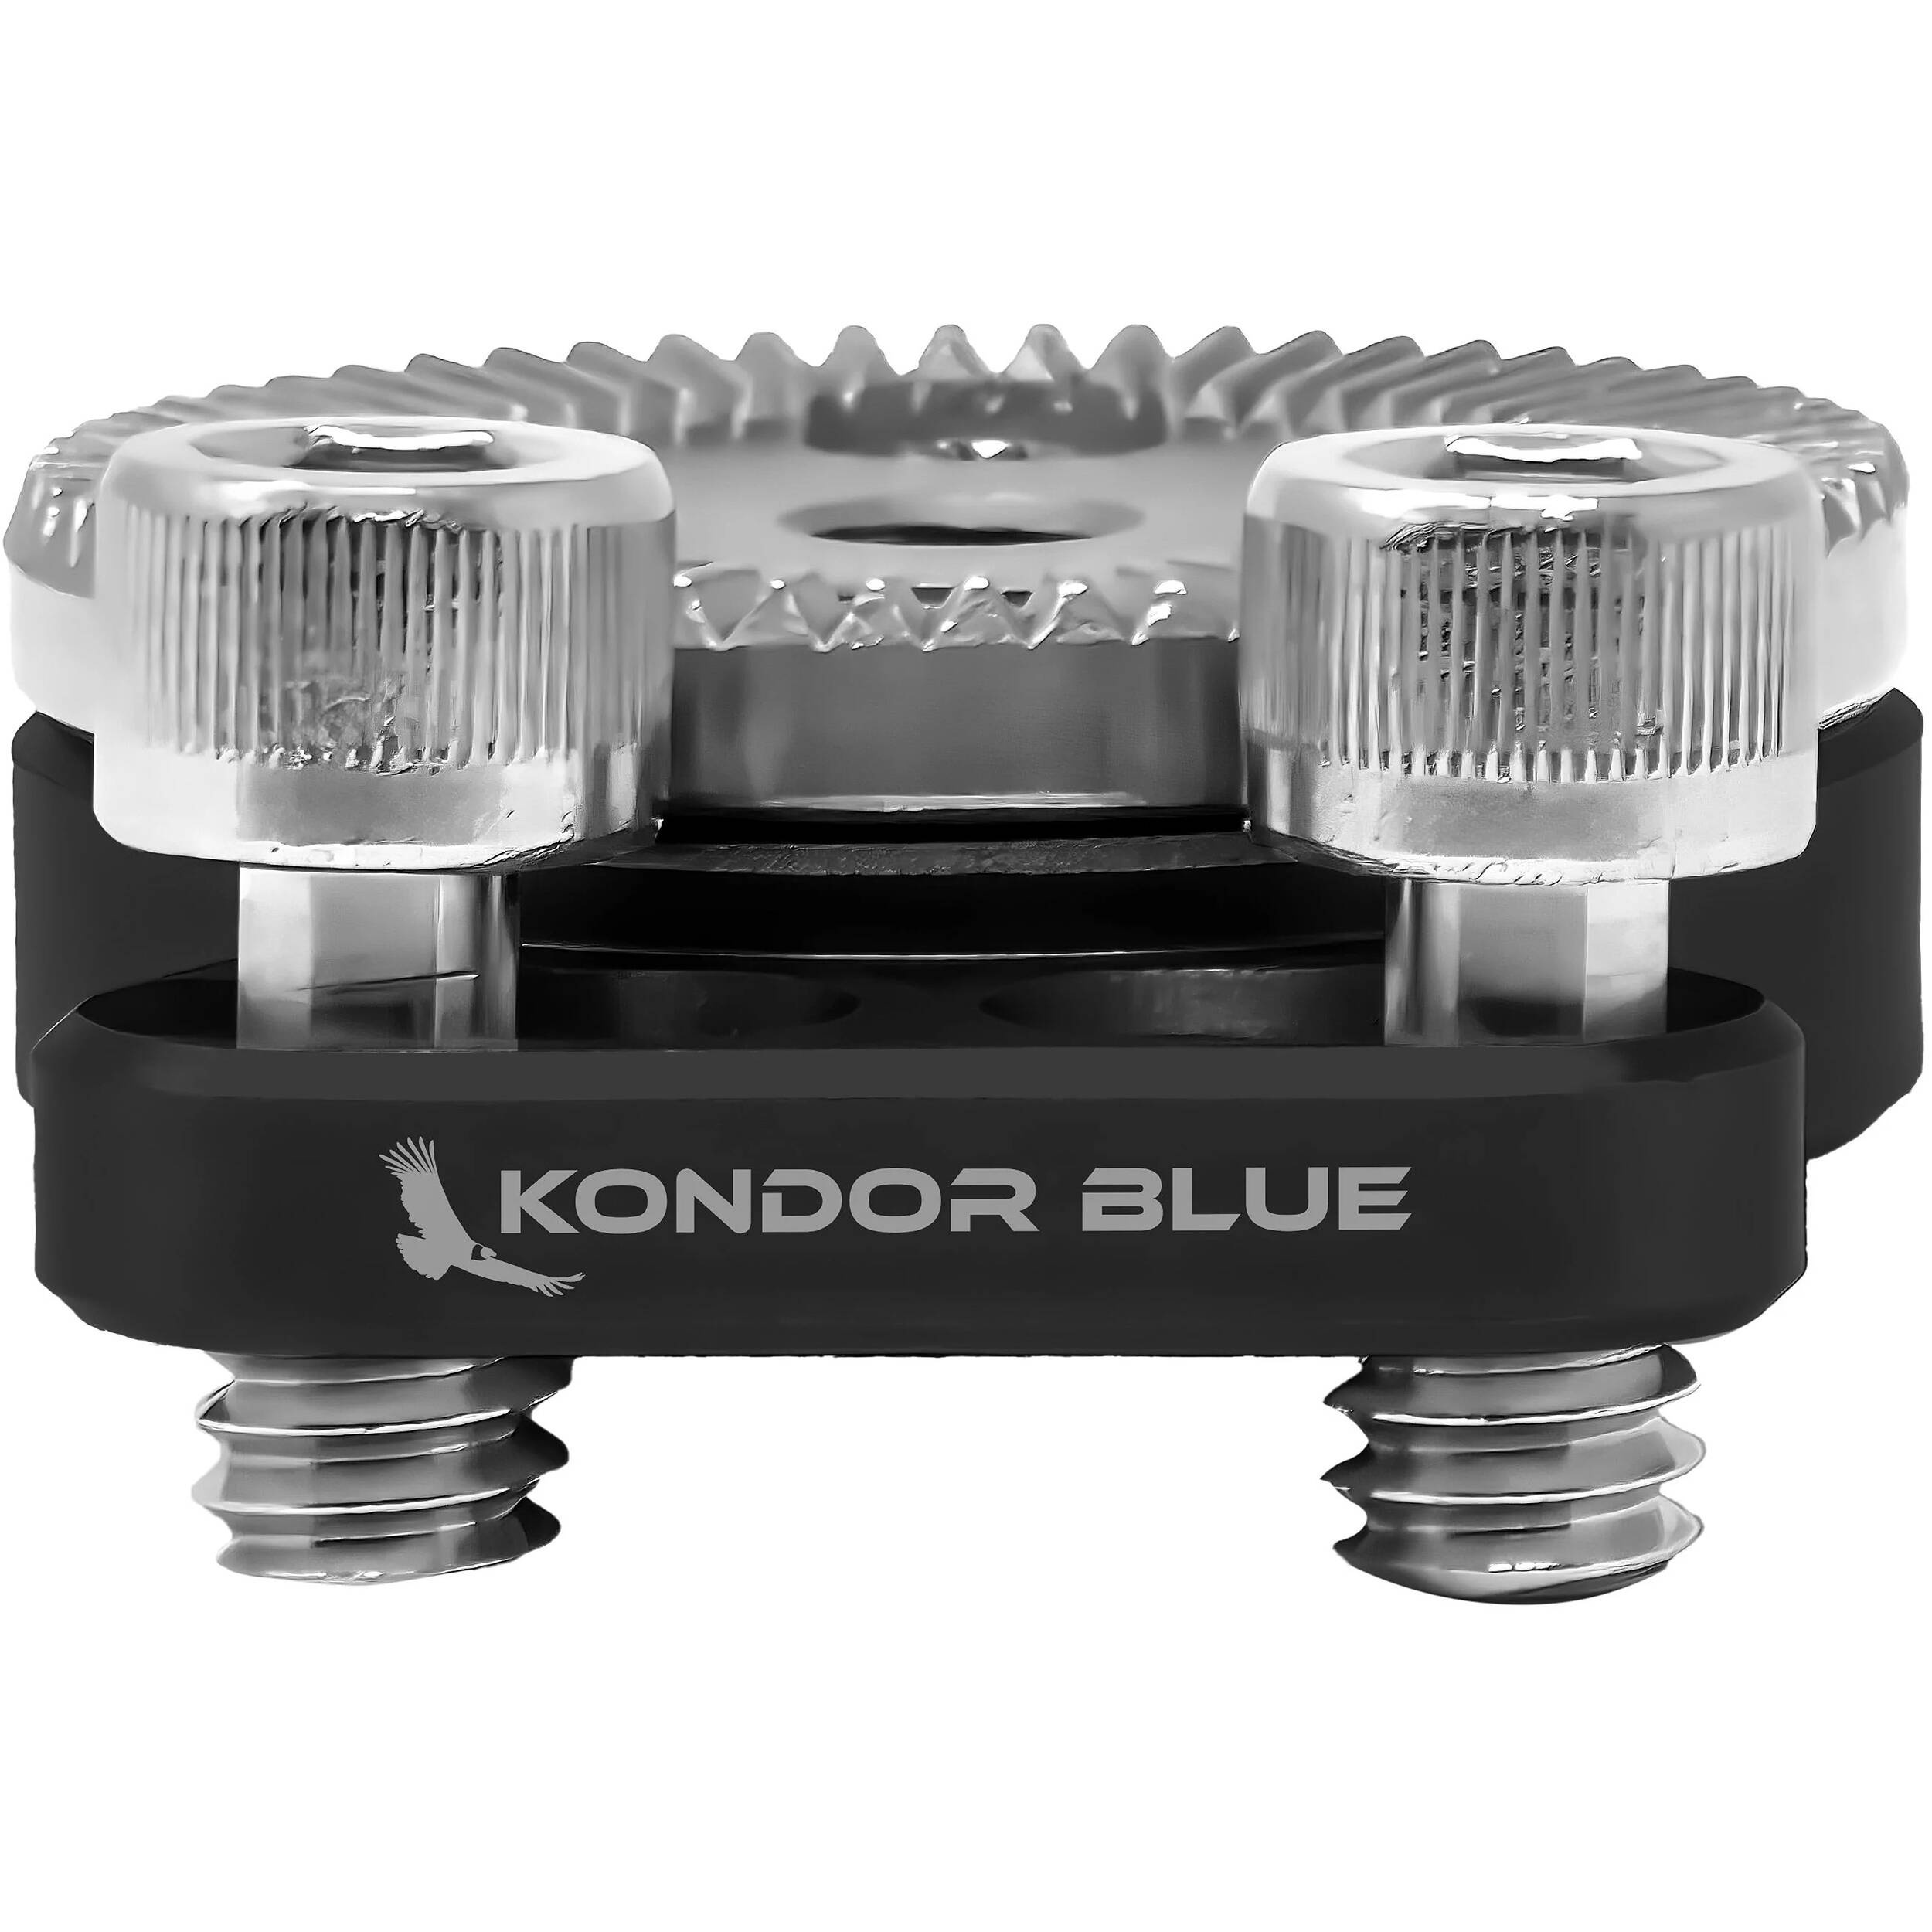 Kondor Blue ARRI-Style Rosette Cage Adapter (Raven Black)